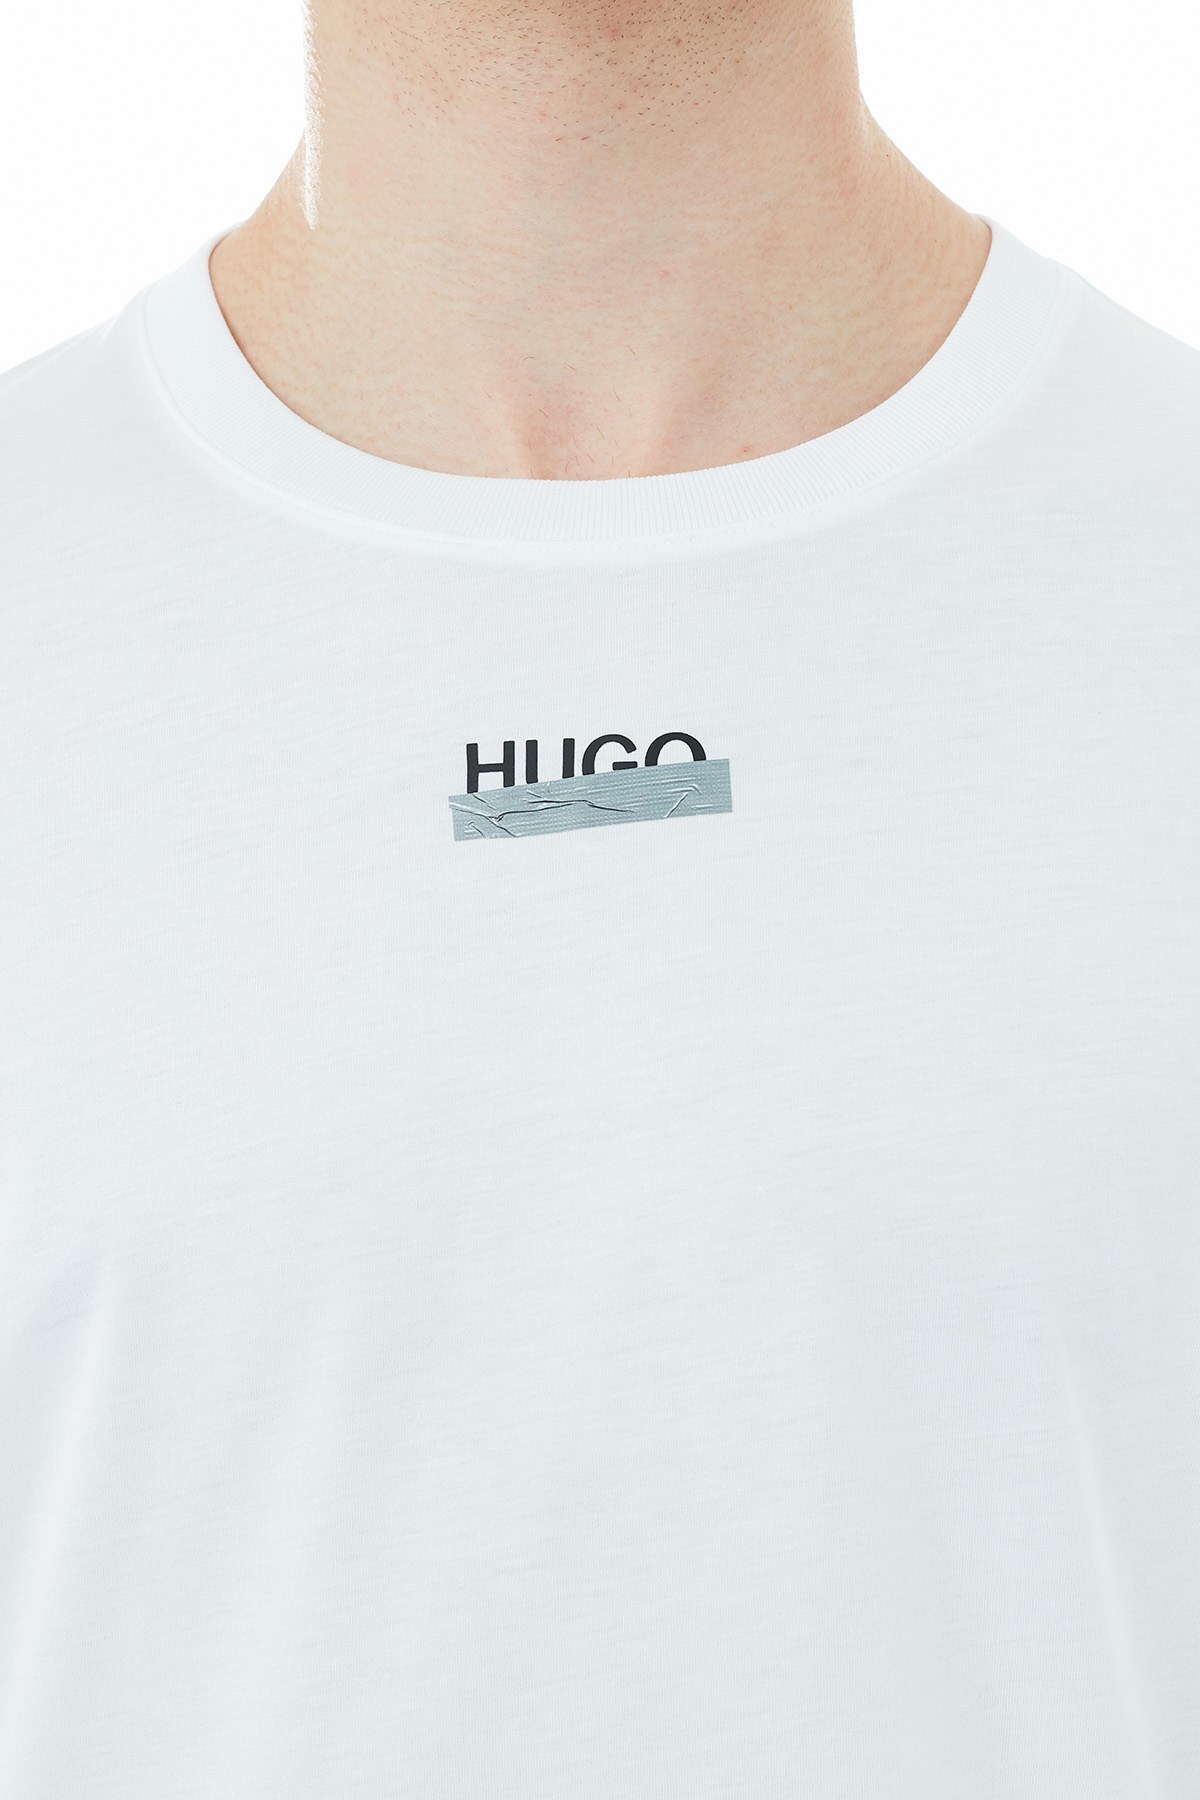 Hugo Boss Regular Fit Baskılı Bisiklet Yaka % 100 Pamuk Erkek T Shirt 50435529 100 BEYAZ